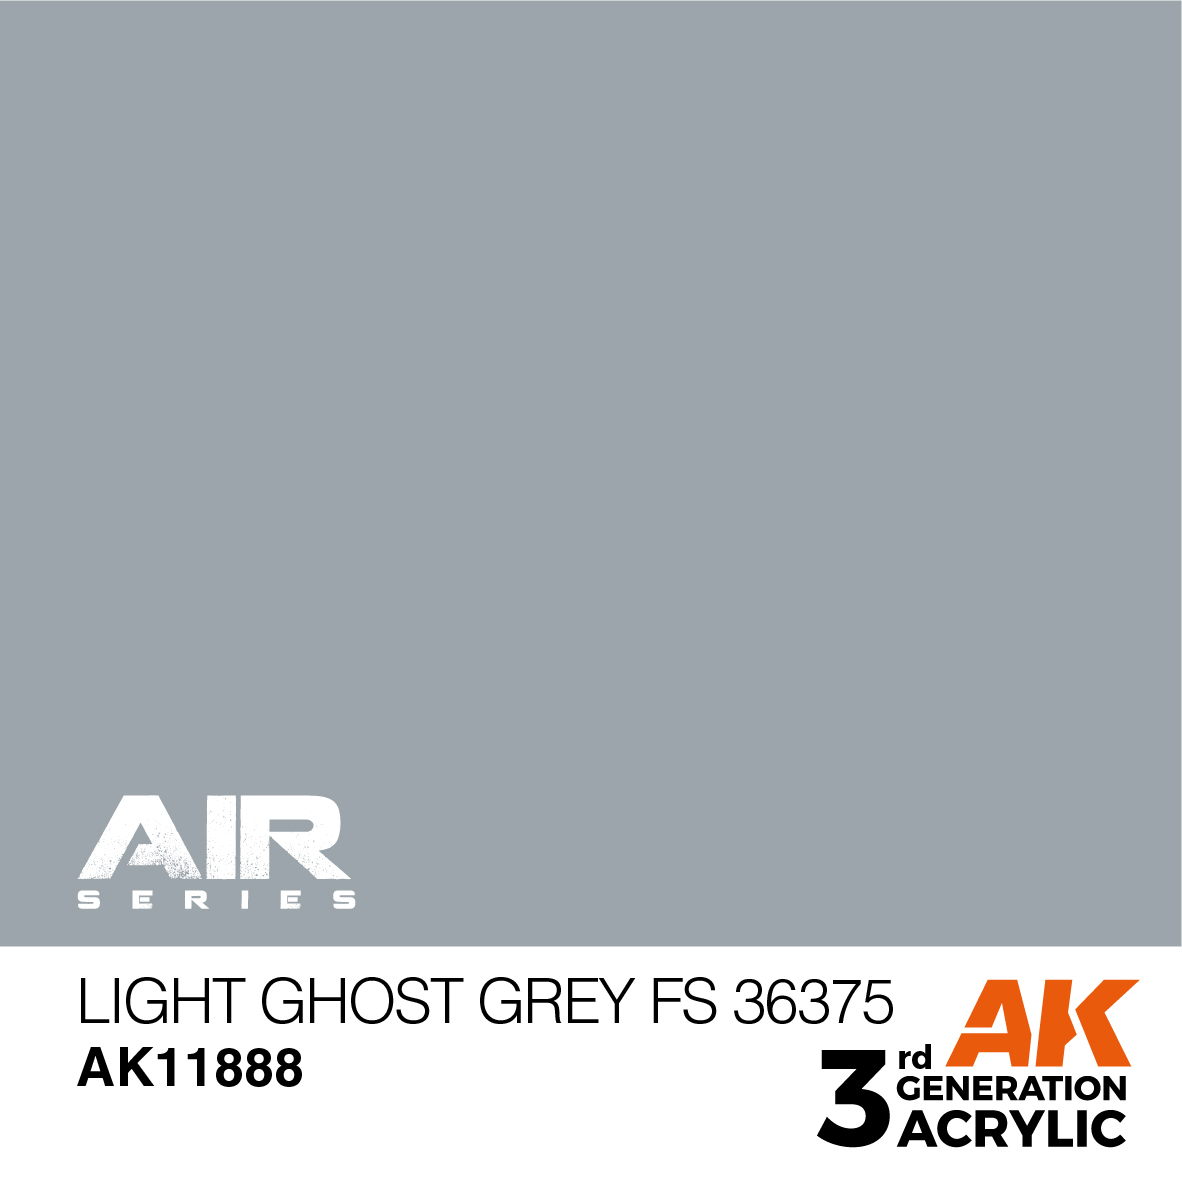 Light Ghost Grey FS 36375 – AIR